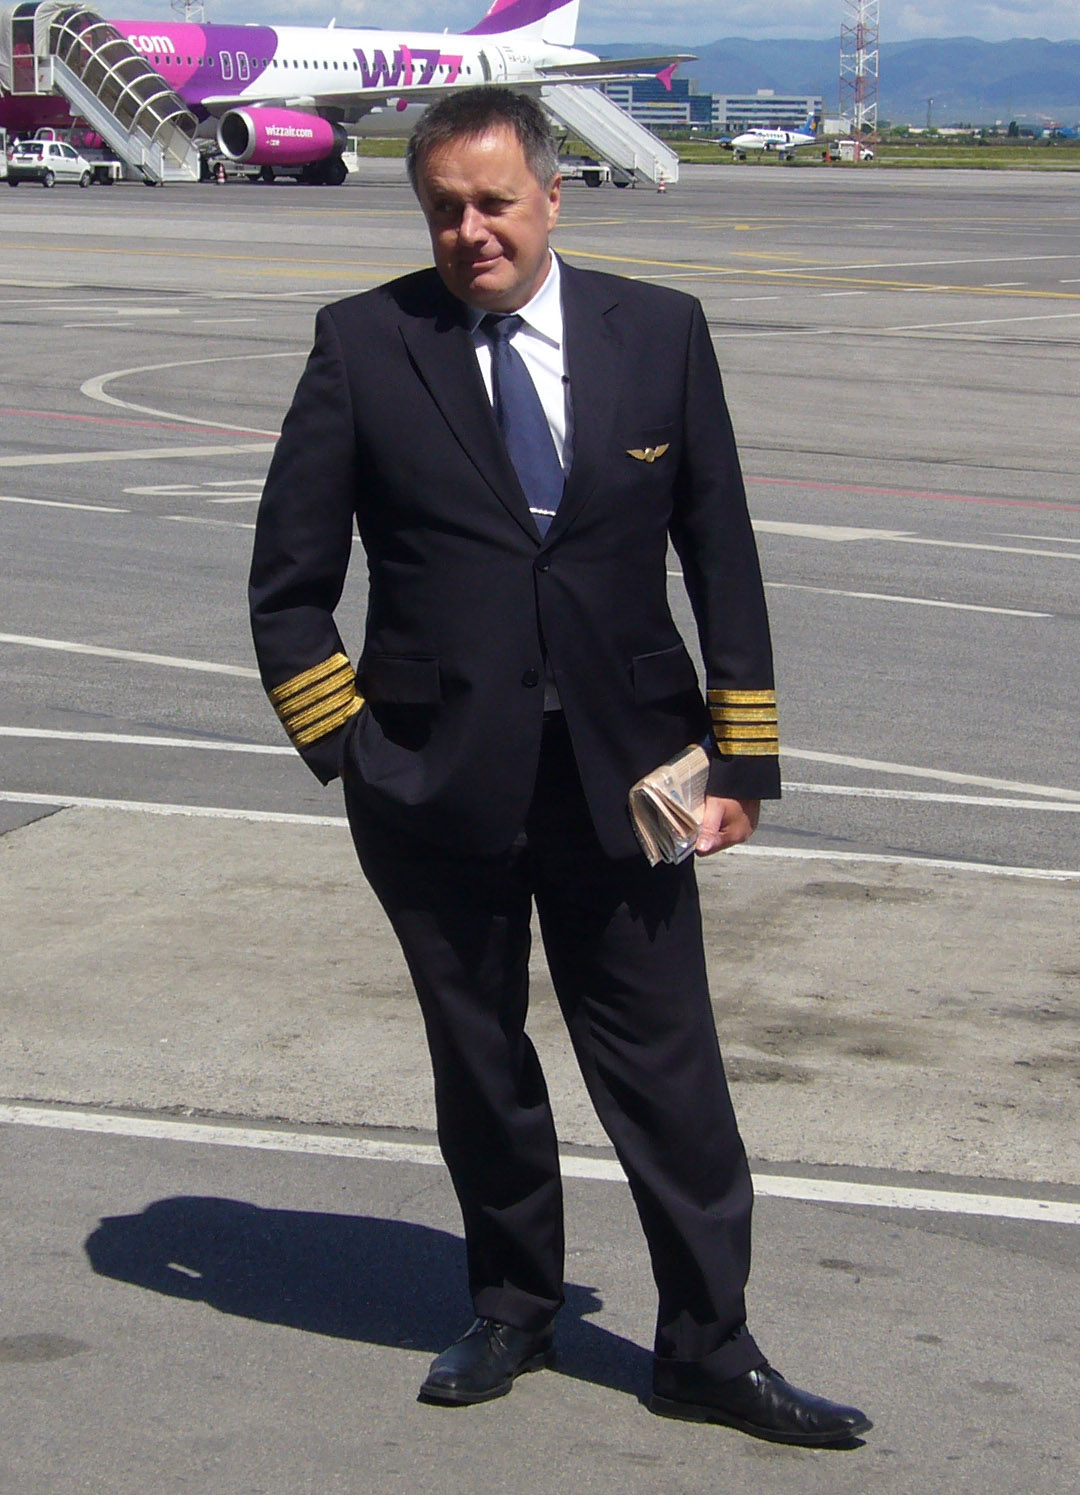 Co-Pilot Matin Grohganz